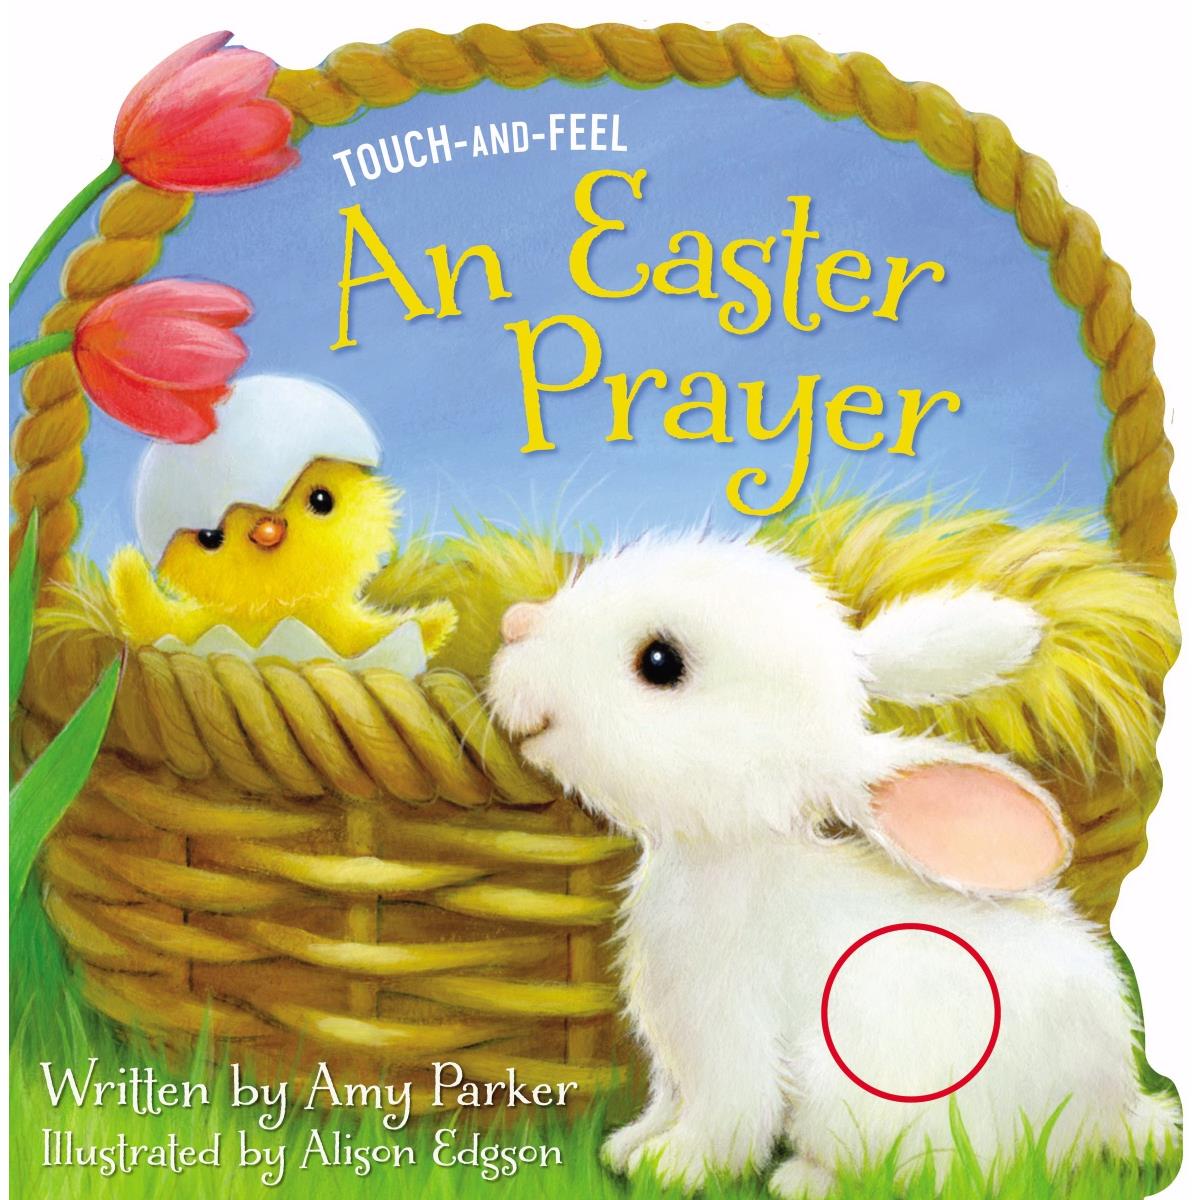 171256 An Easter Prayer - Touch & Feel